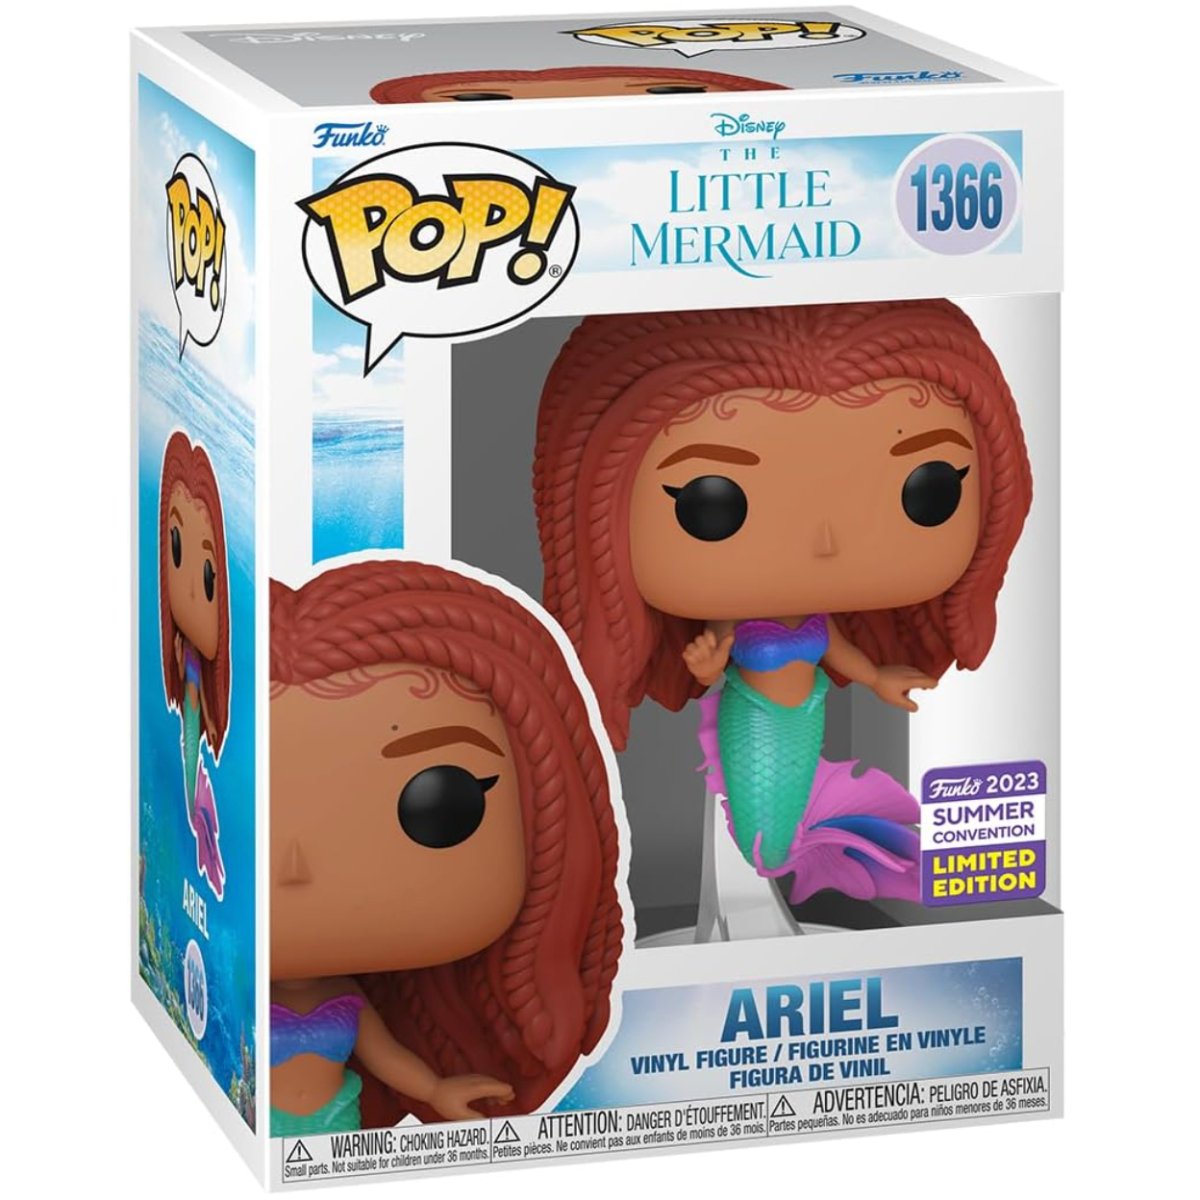 The Little Mermaid - Ariel (2023 Summer Convention Limited Edition) #1366 - Funko Pop! Vinyl Disney - Persona Toys